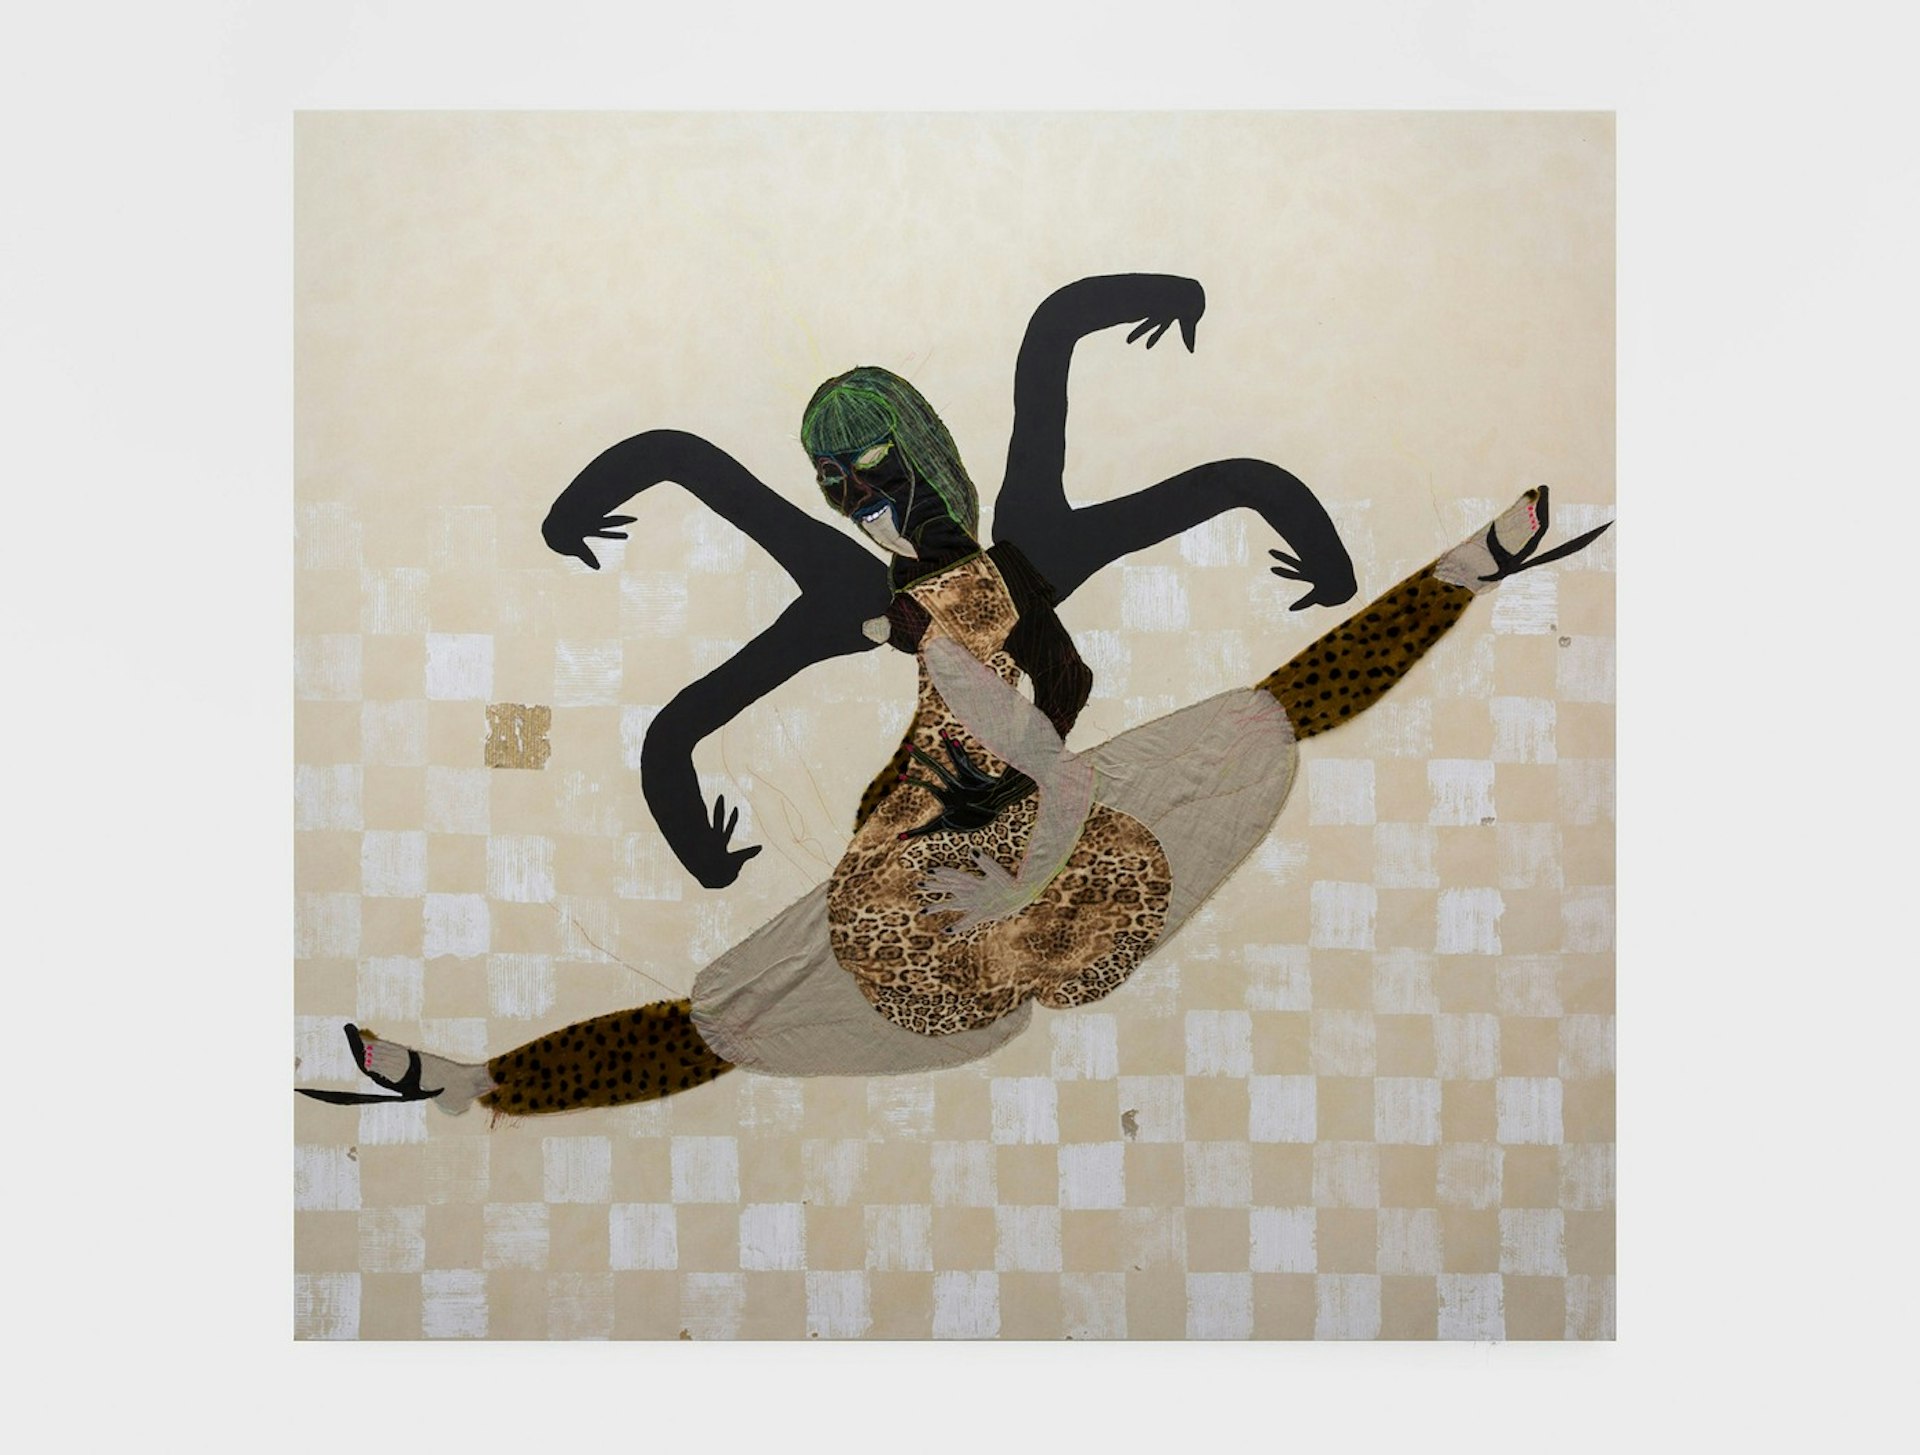 Tschabalala Self, Floor Dance, 2016. Courtesy the artist and Thierry Goldberg, New York